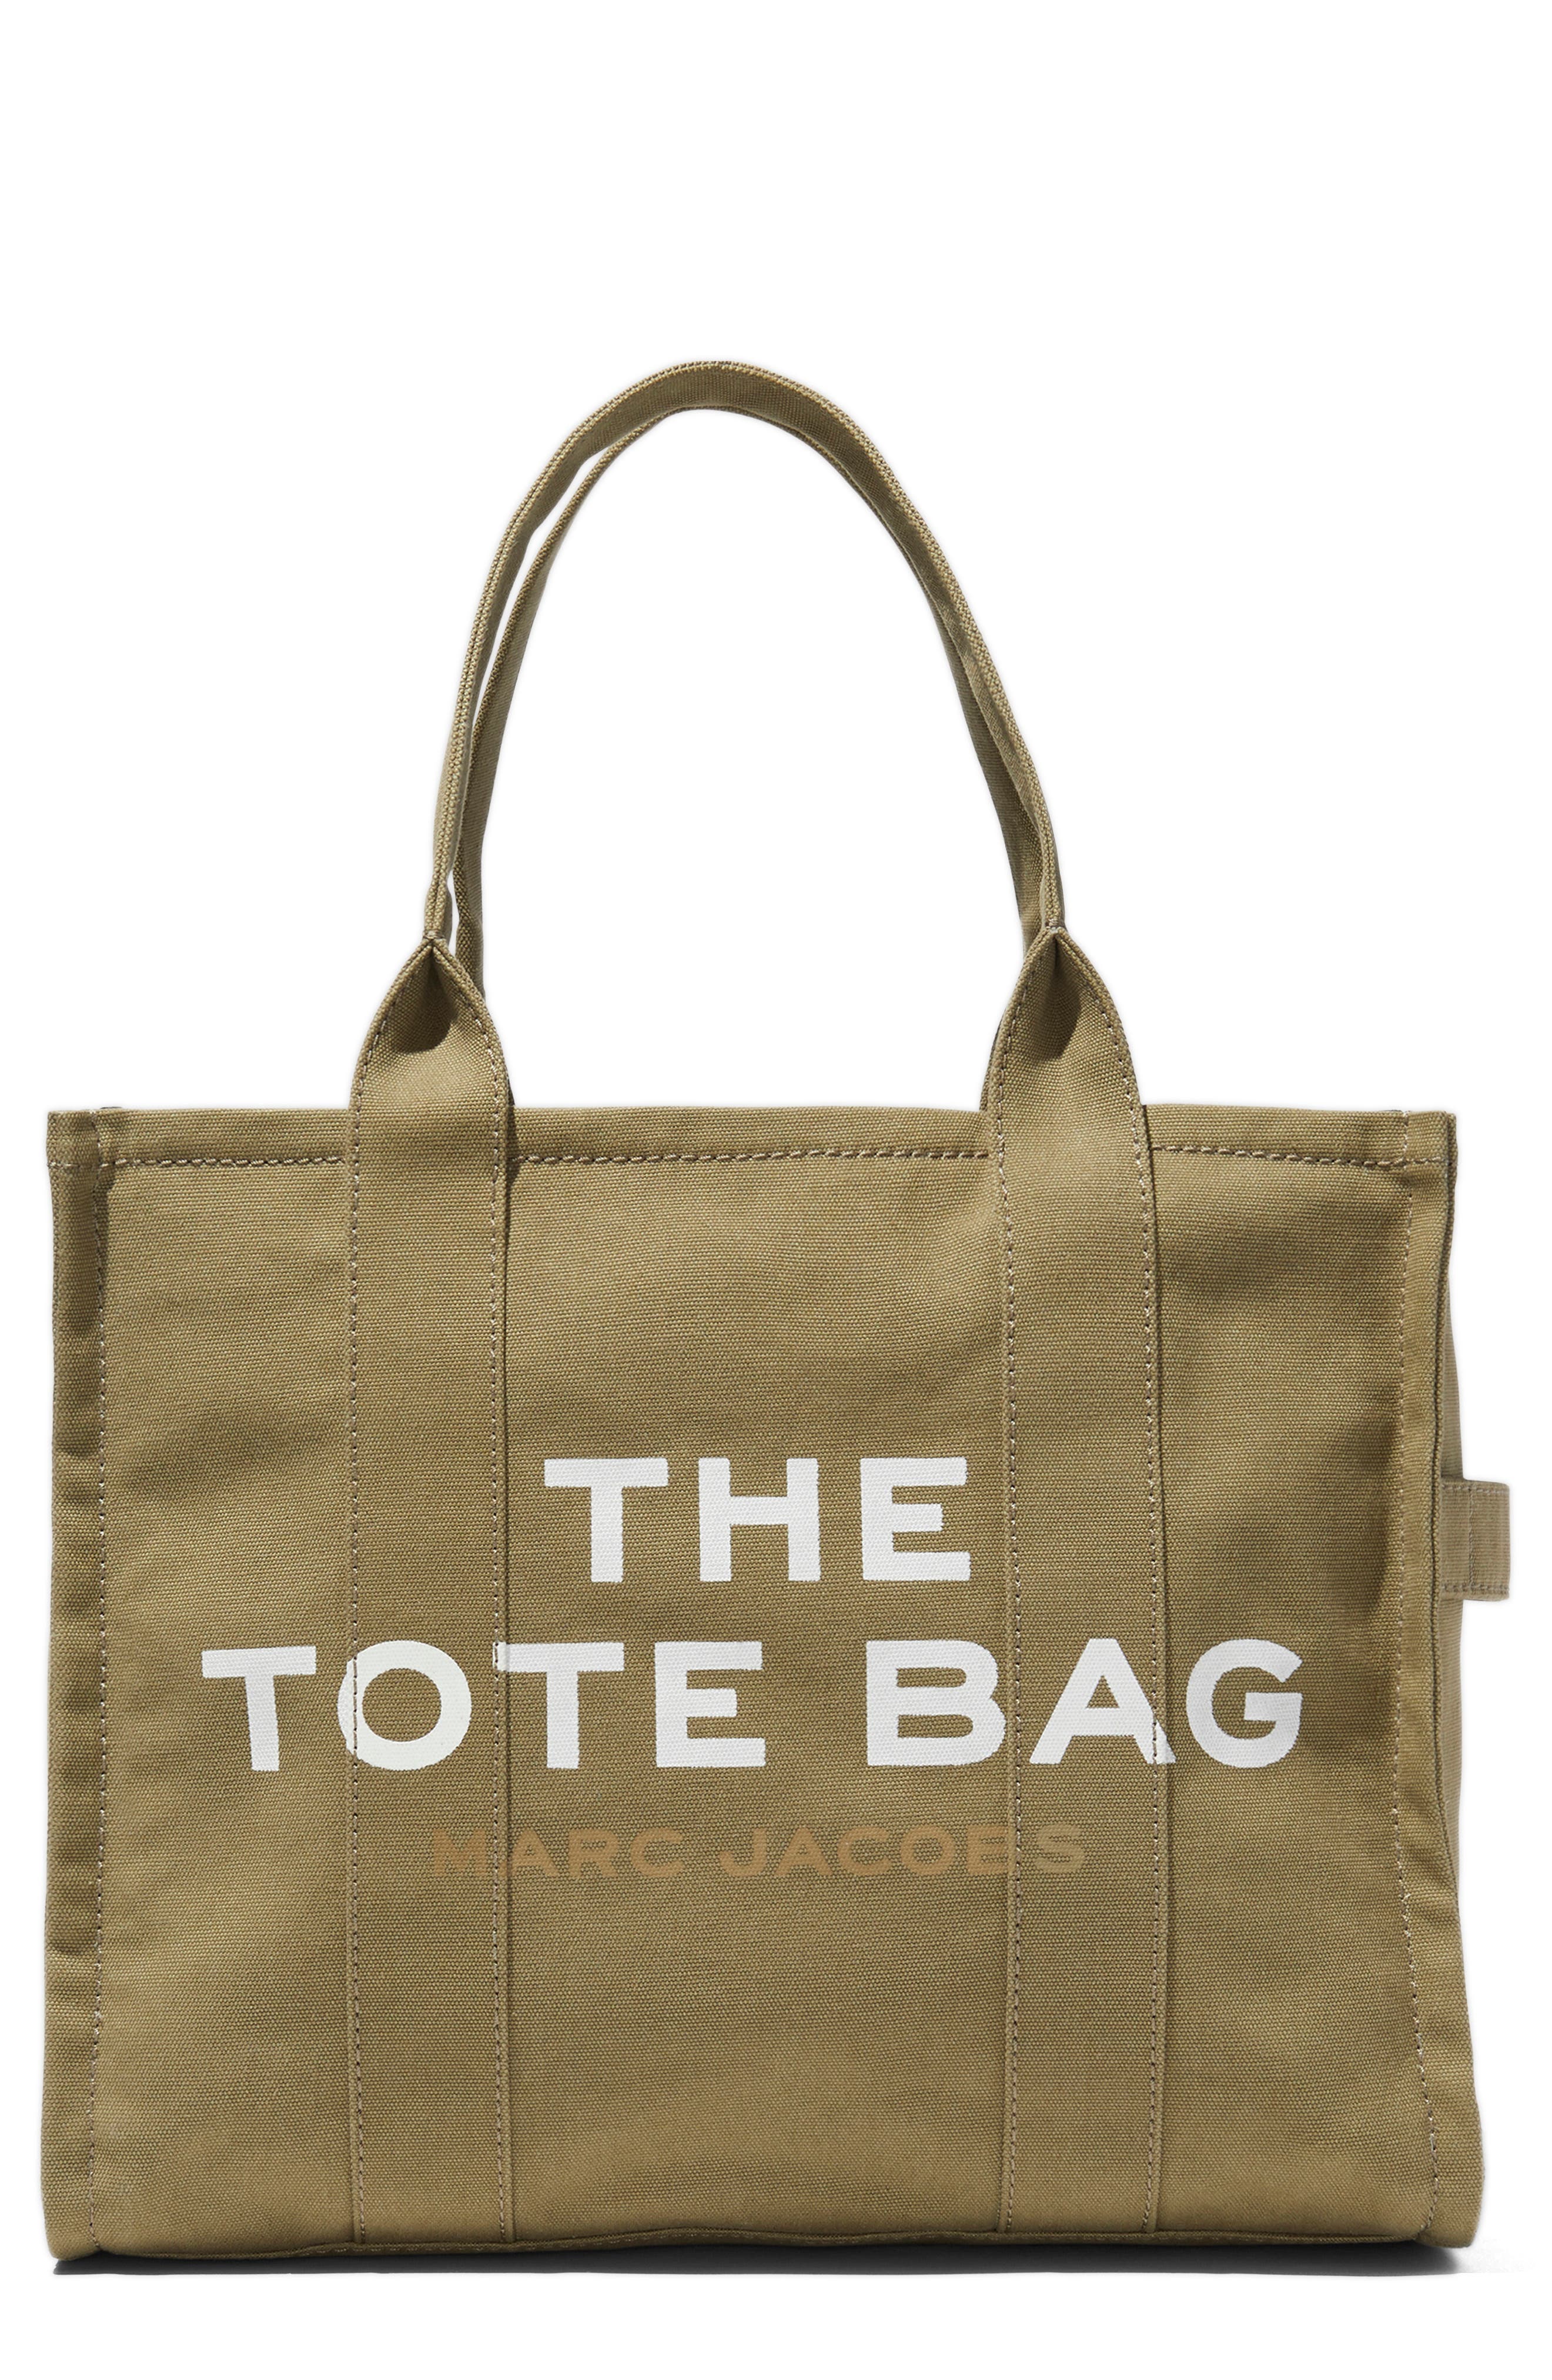 Women Girls Canvas Shopping Handbag Shoulder Tote Shopper Crossbody Bag Shoulder Bags Satchels Green 